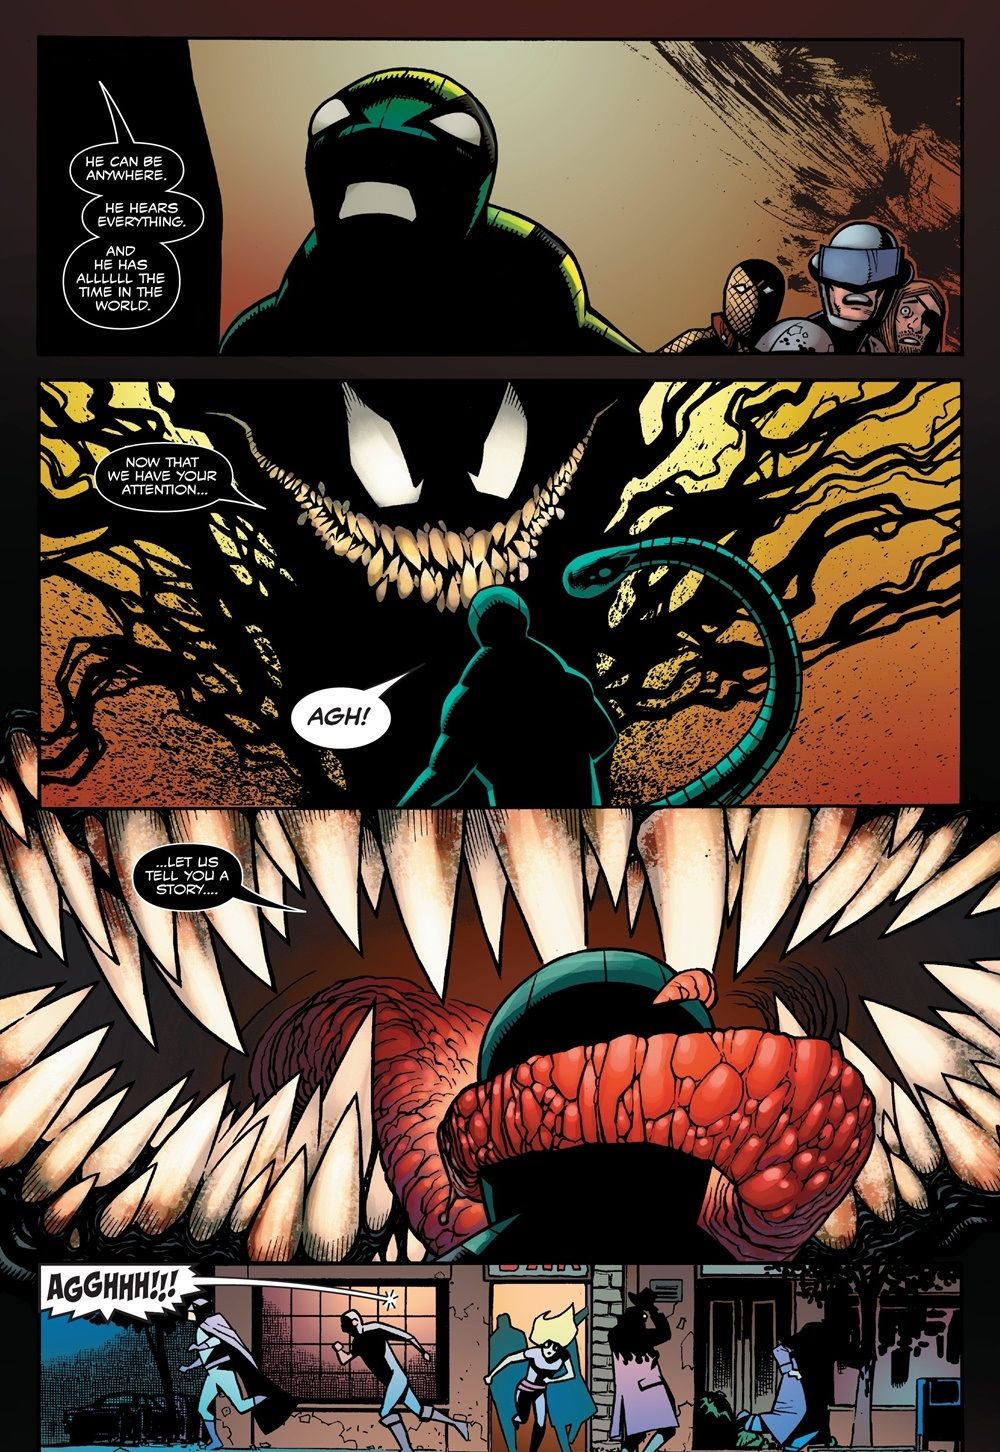 Venom eats Scorpion